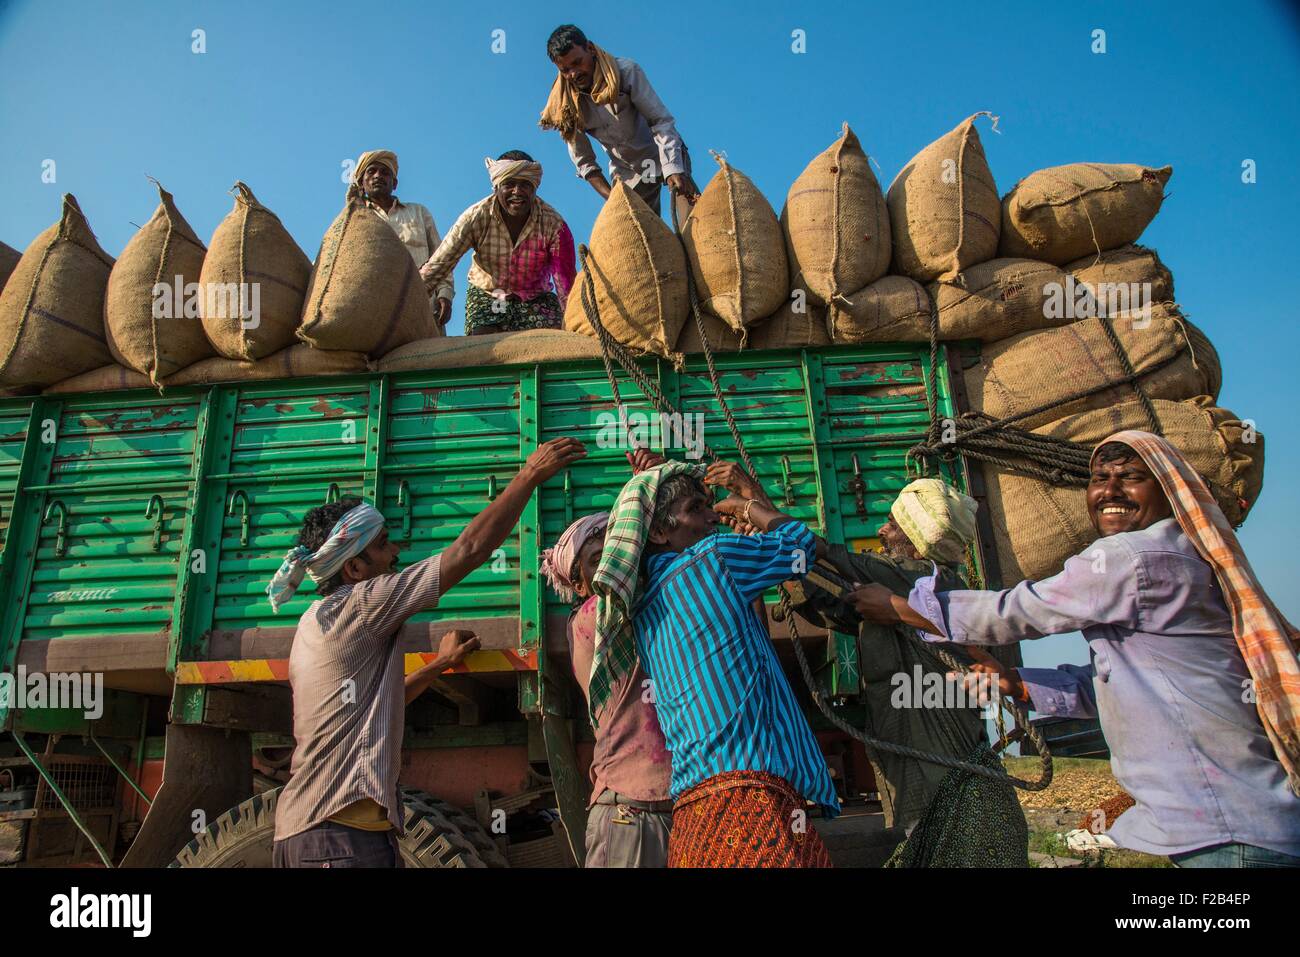 Indian farm workers load sacks of dry chili peppers June 18, 2015 in Gabbur, district Raichur, Karnataka, India. Stock Photo